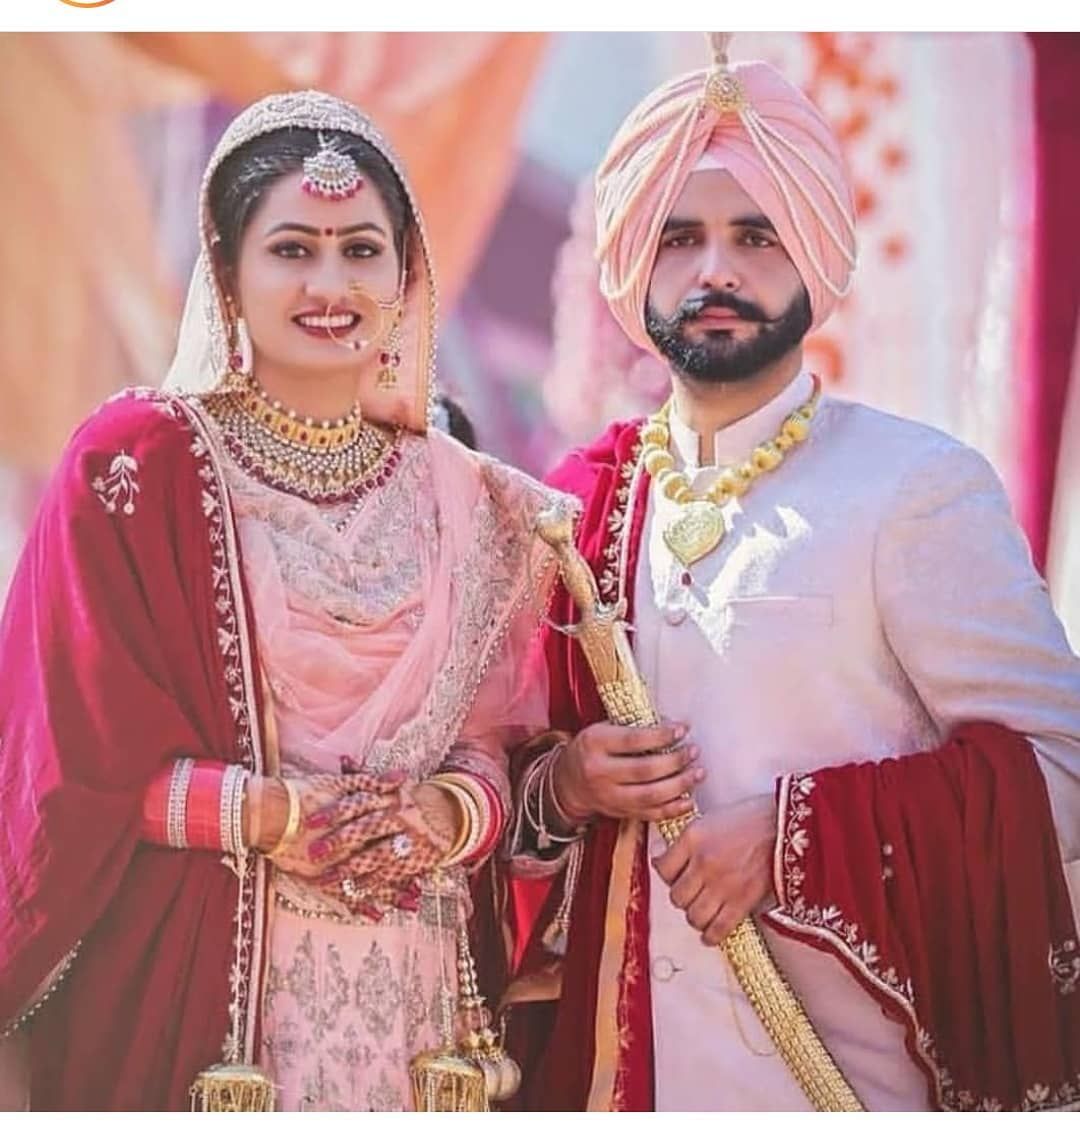 Best} Punjabi Couple Pics Image Wallpaper.com. Indian wedding couple, Indian wedding couple photography, Punjabi couple